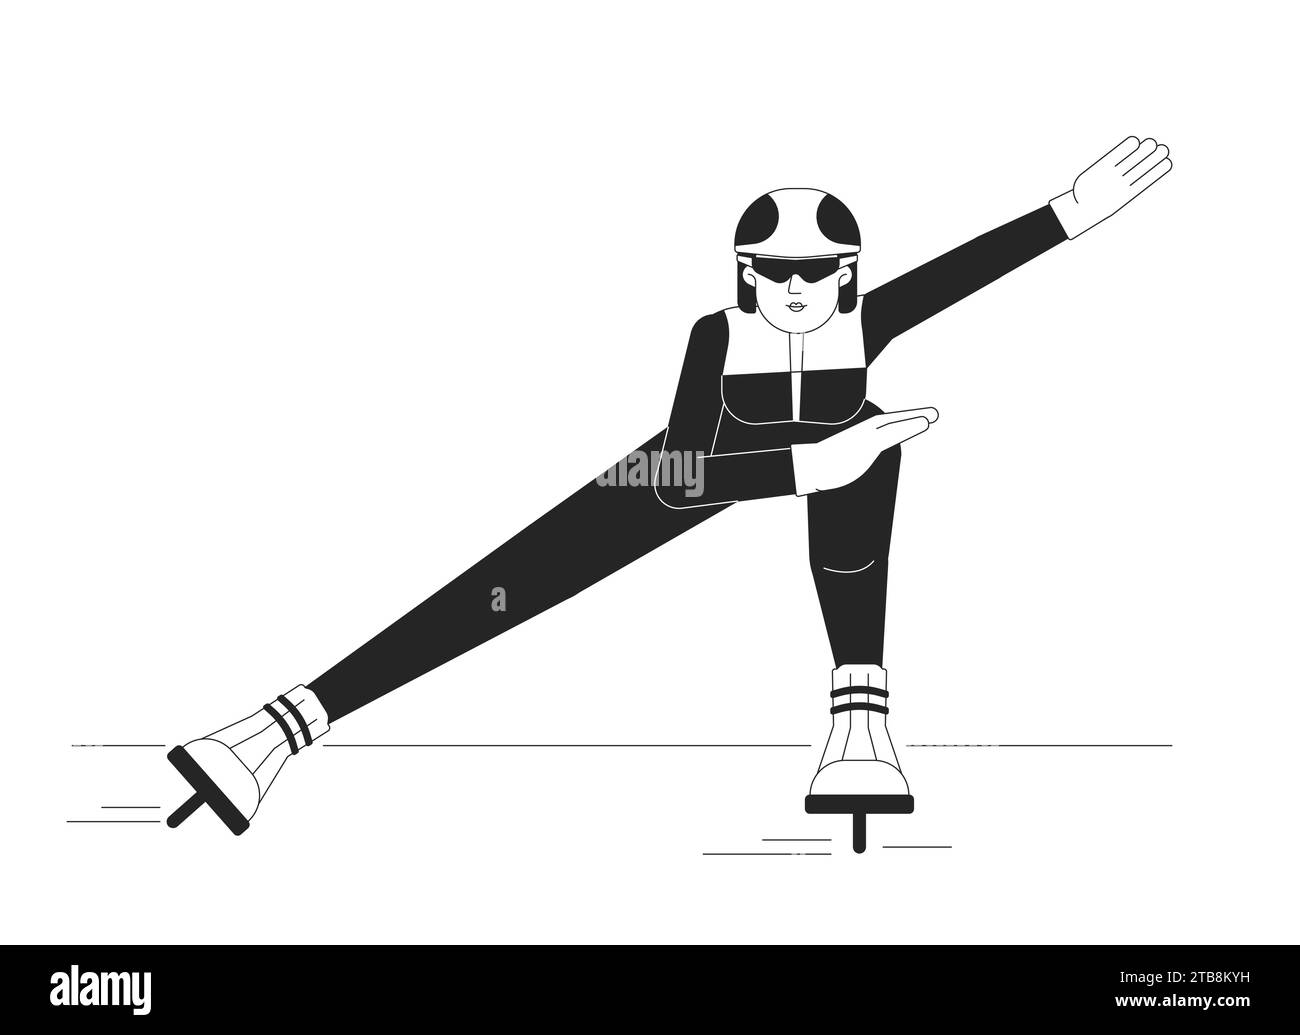 Ice speed skater woman black and white cartoon flat illustration Stock Vector